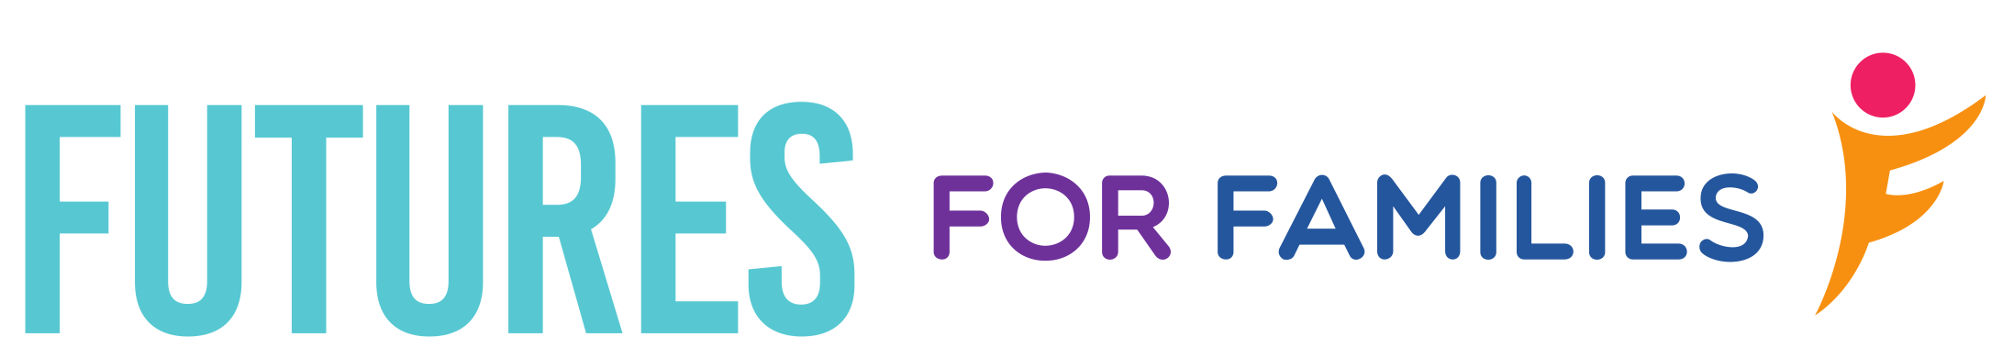 Future for families logo